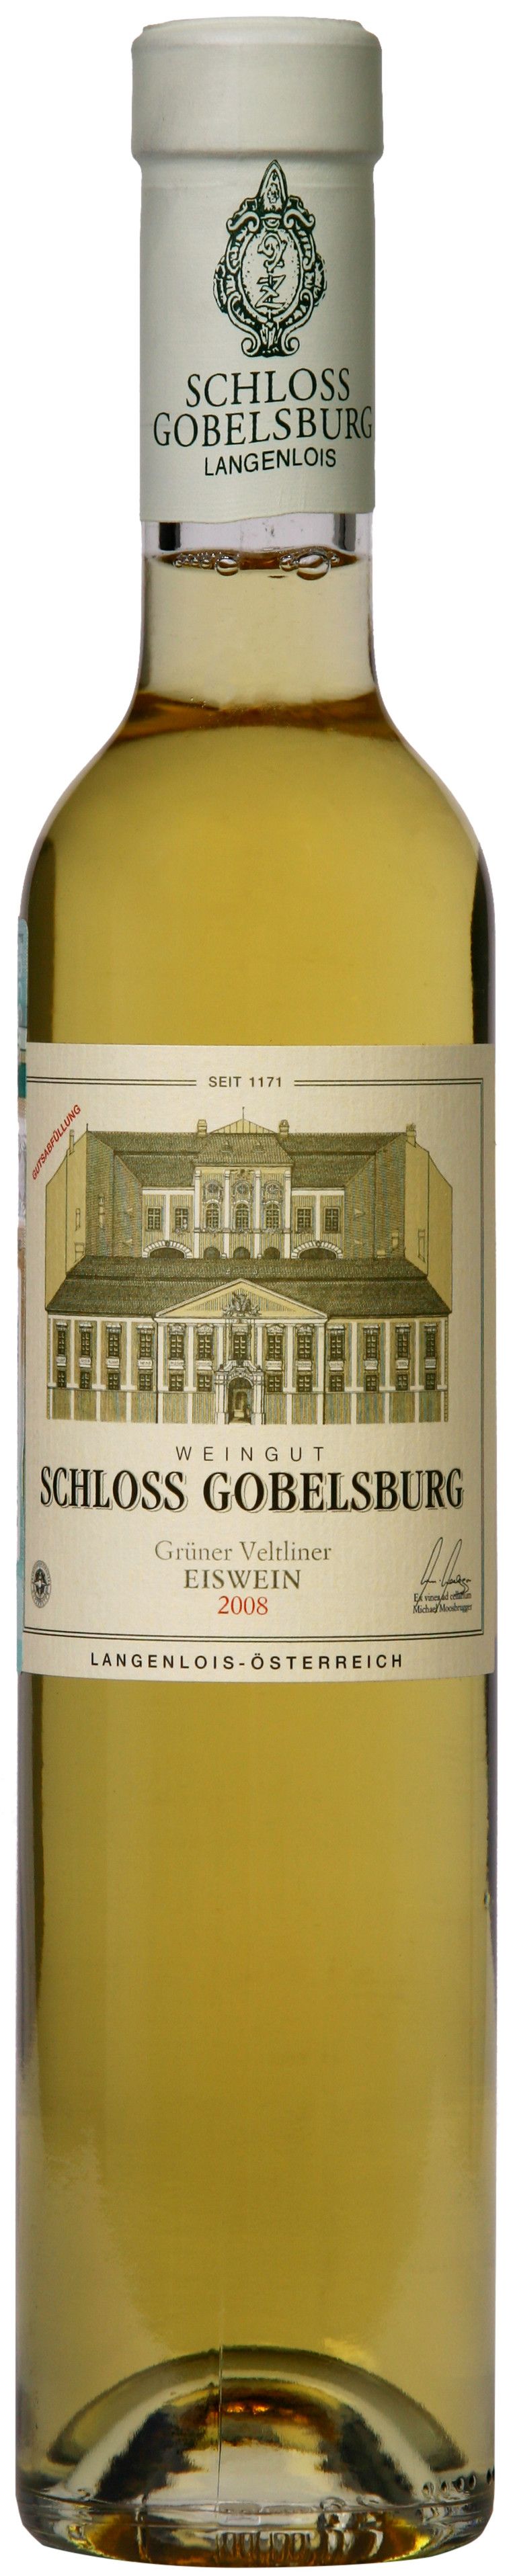 Schloss Gobelsburg, Gruner Veltliner Eiswein, 2008